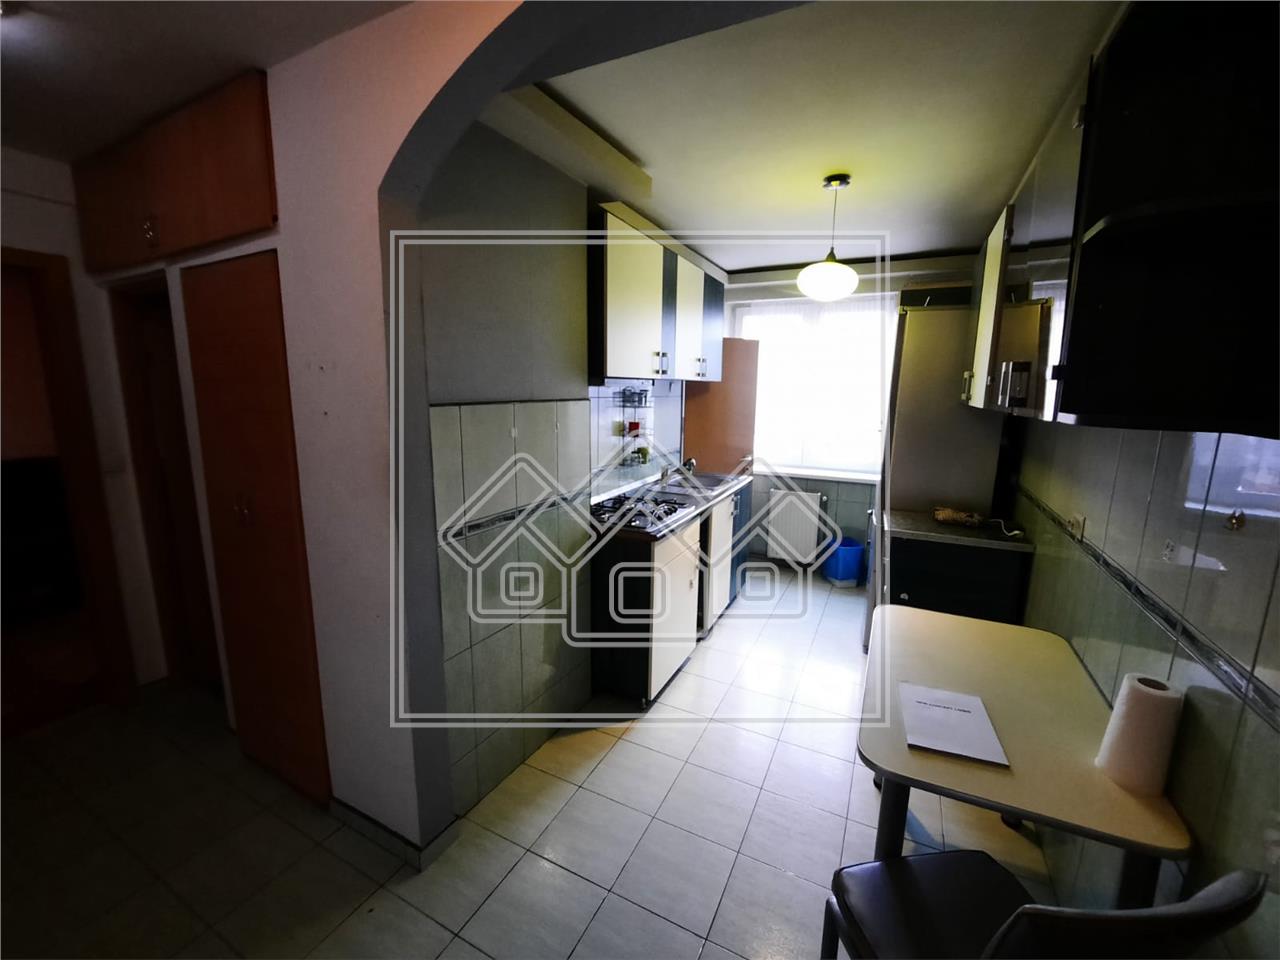 Apartment for rent in Sibiu - 3 rooms, et. 3, balcony - CEC area